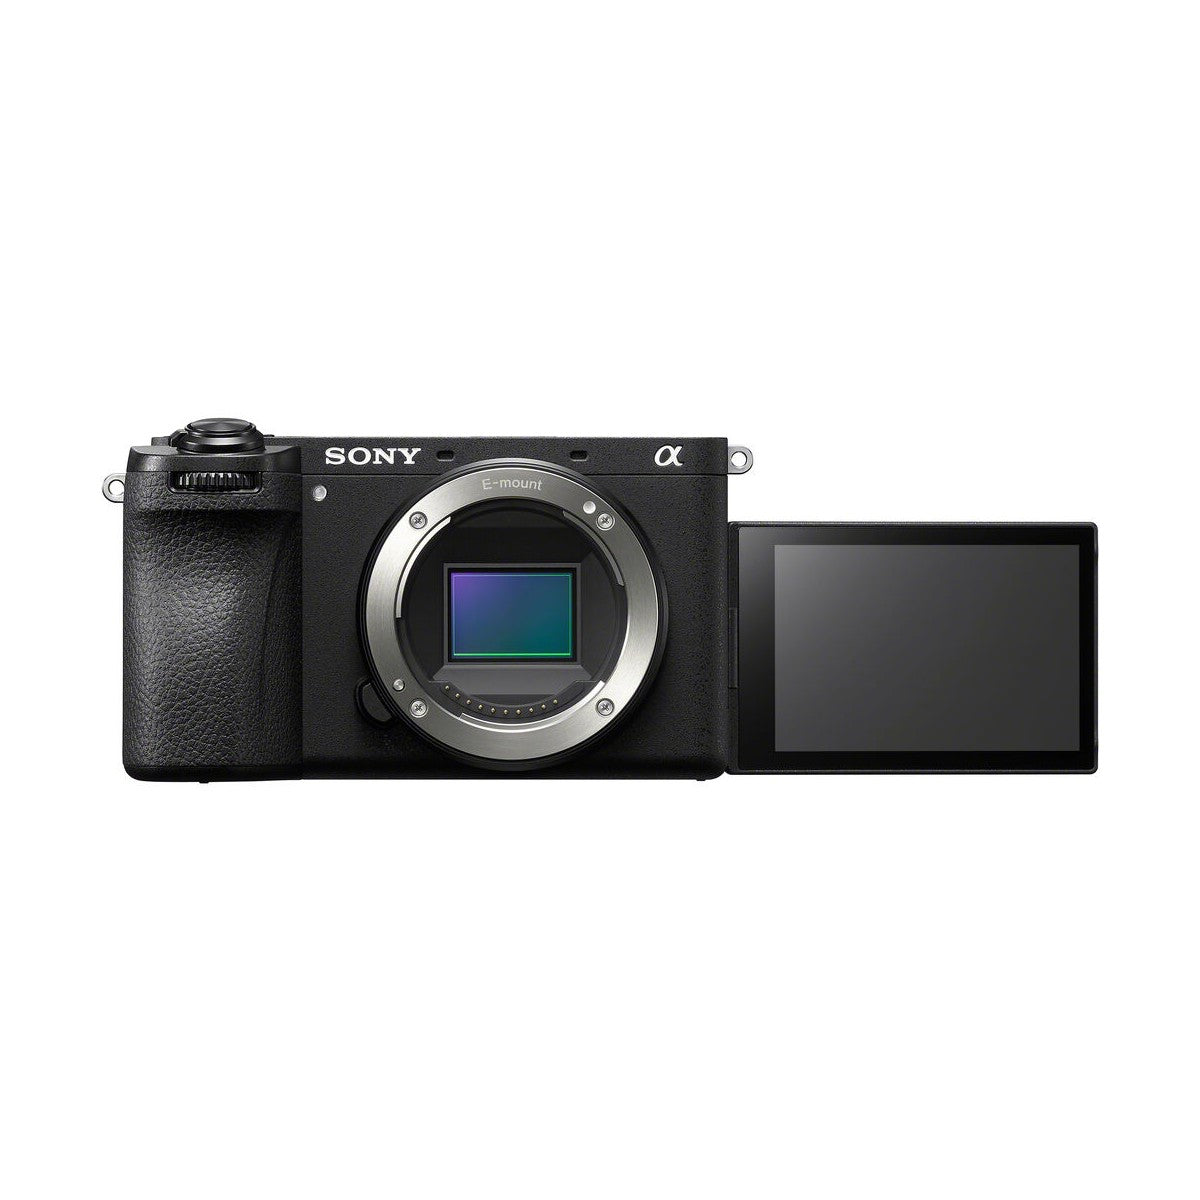 Sony Alpha a6700 Mirrorless Camera Body